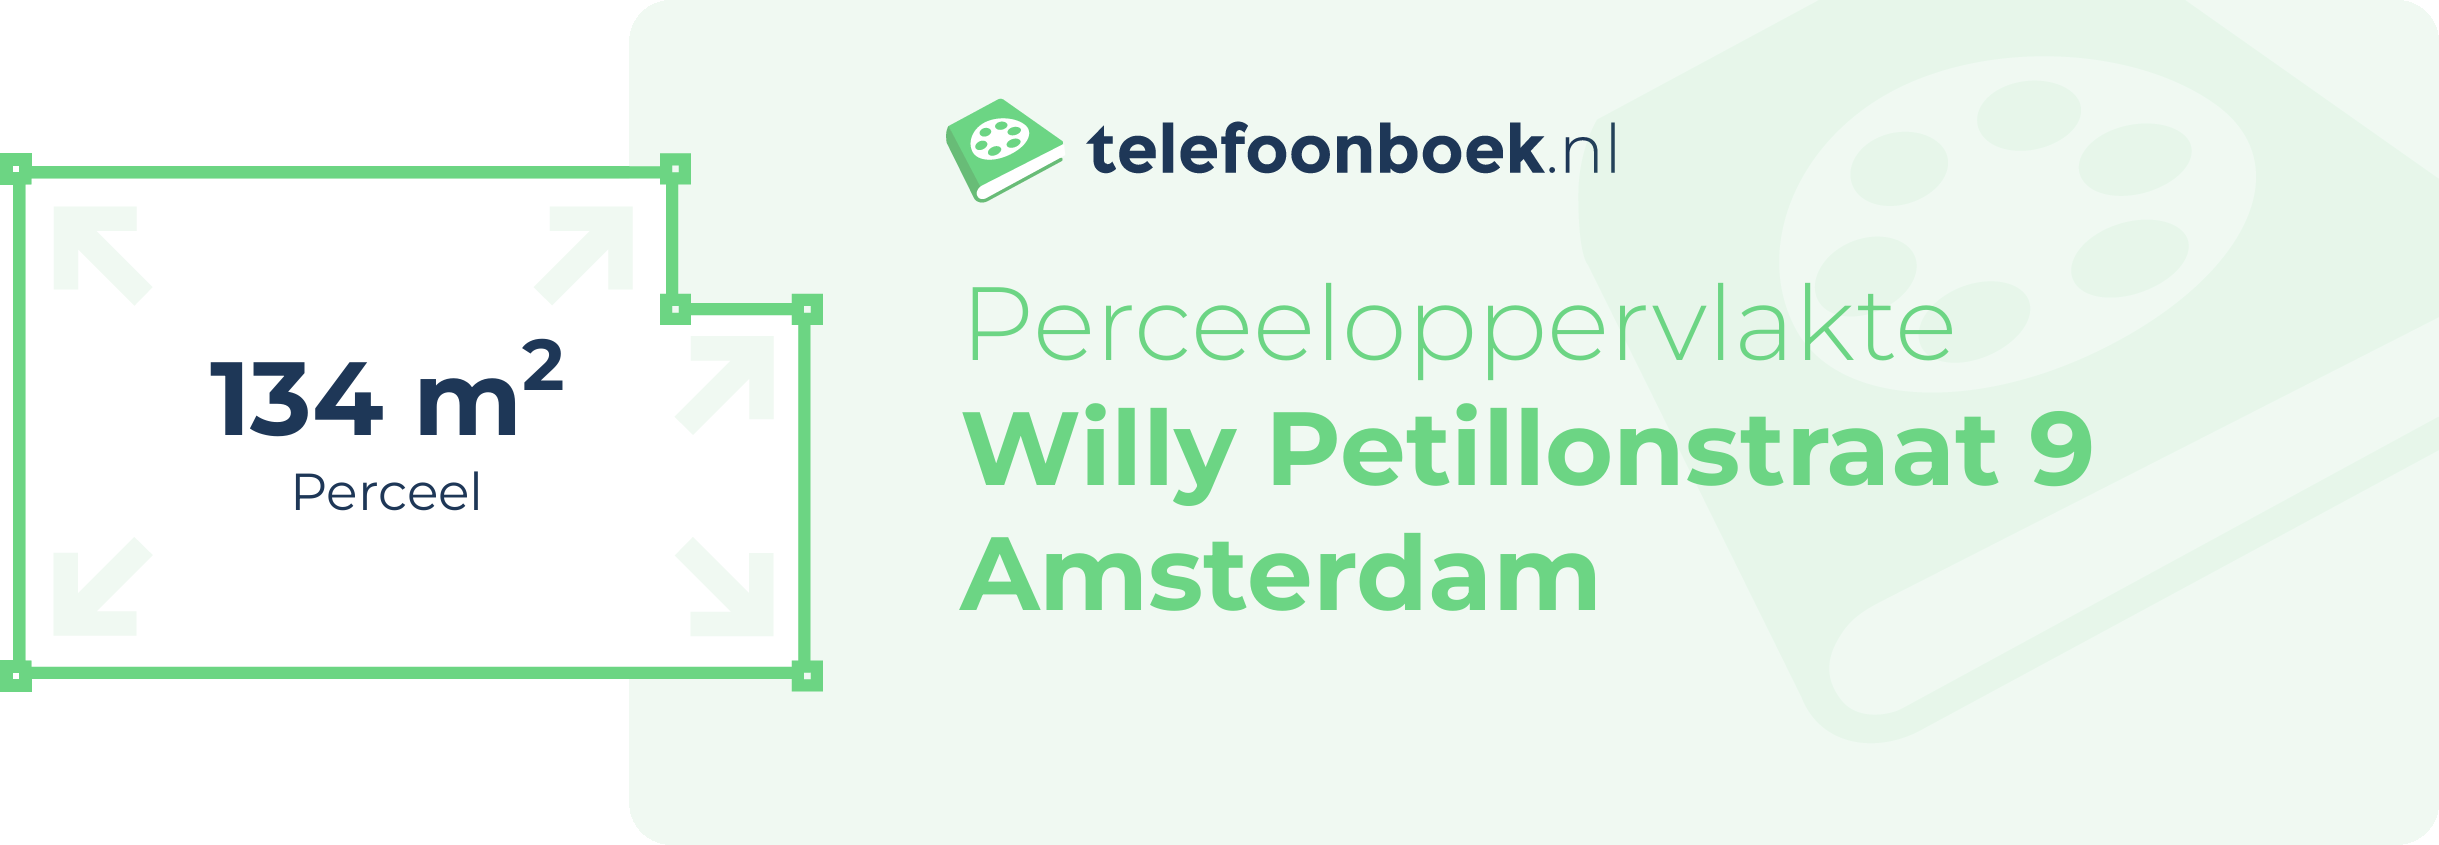 Perceeloppervlakte Willy Petillonstraat 9 Amsterdam